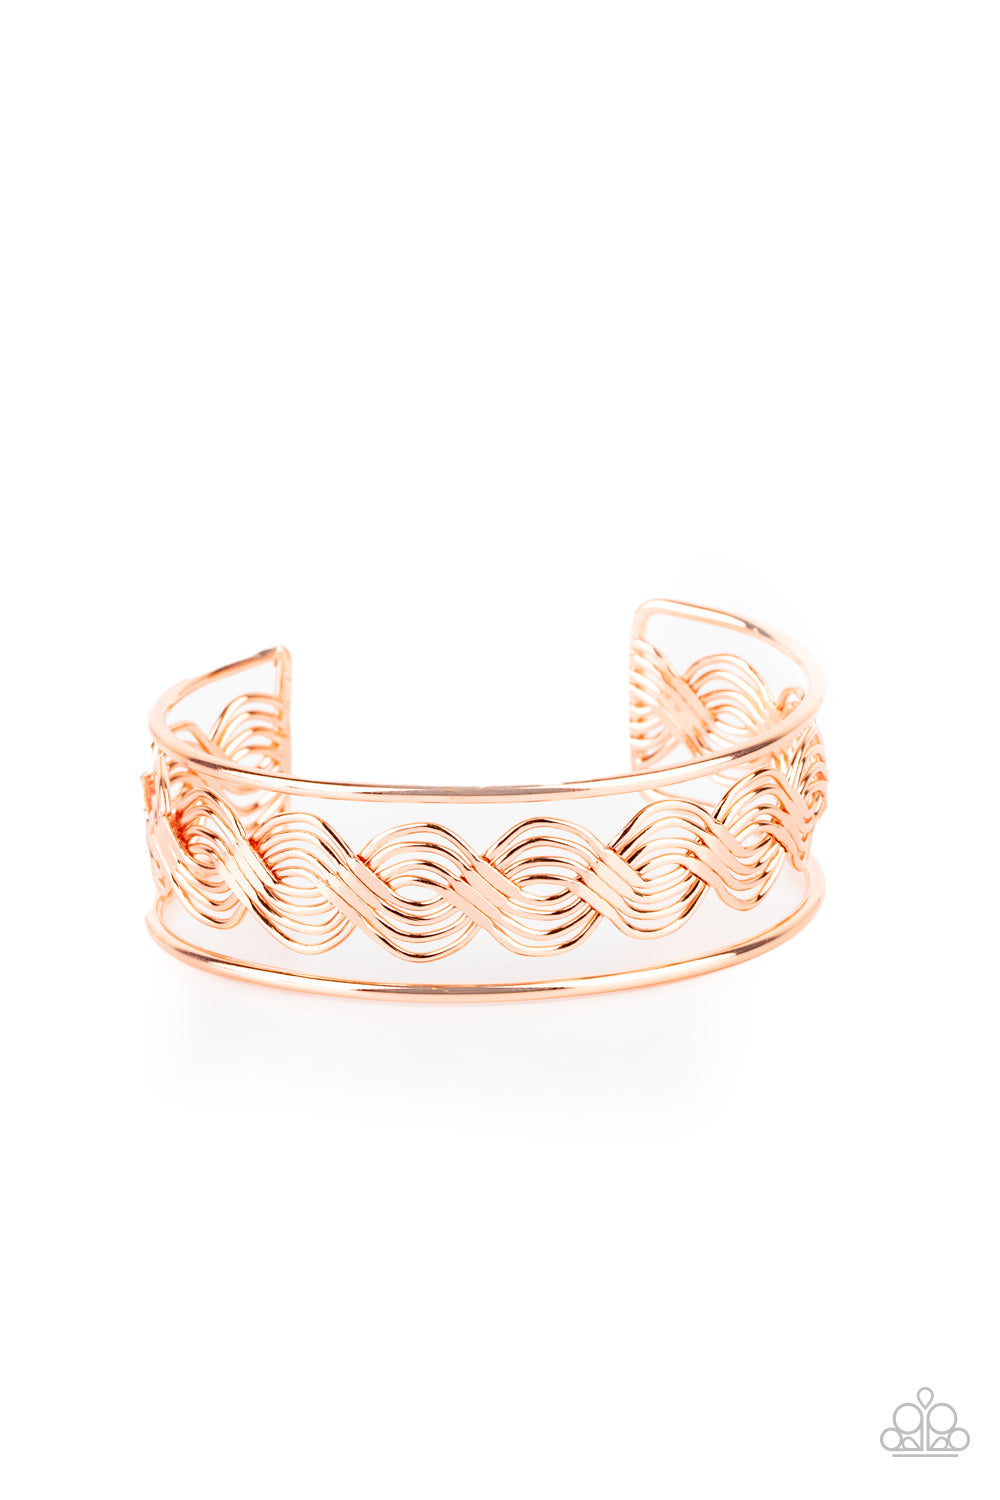 WEAVE An Impression - Copper Cuff Bracelet - Princess Glam Shop